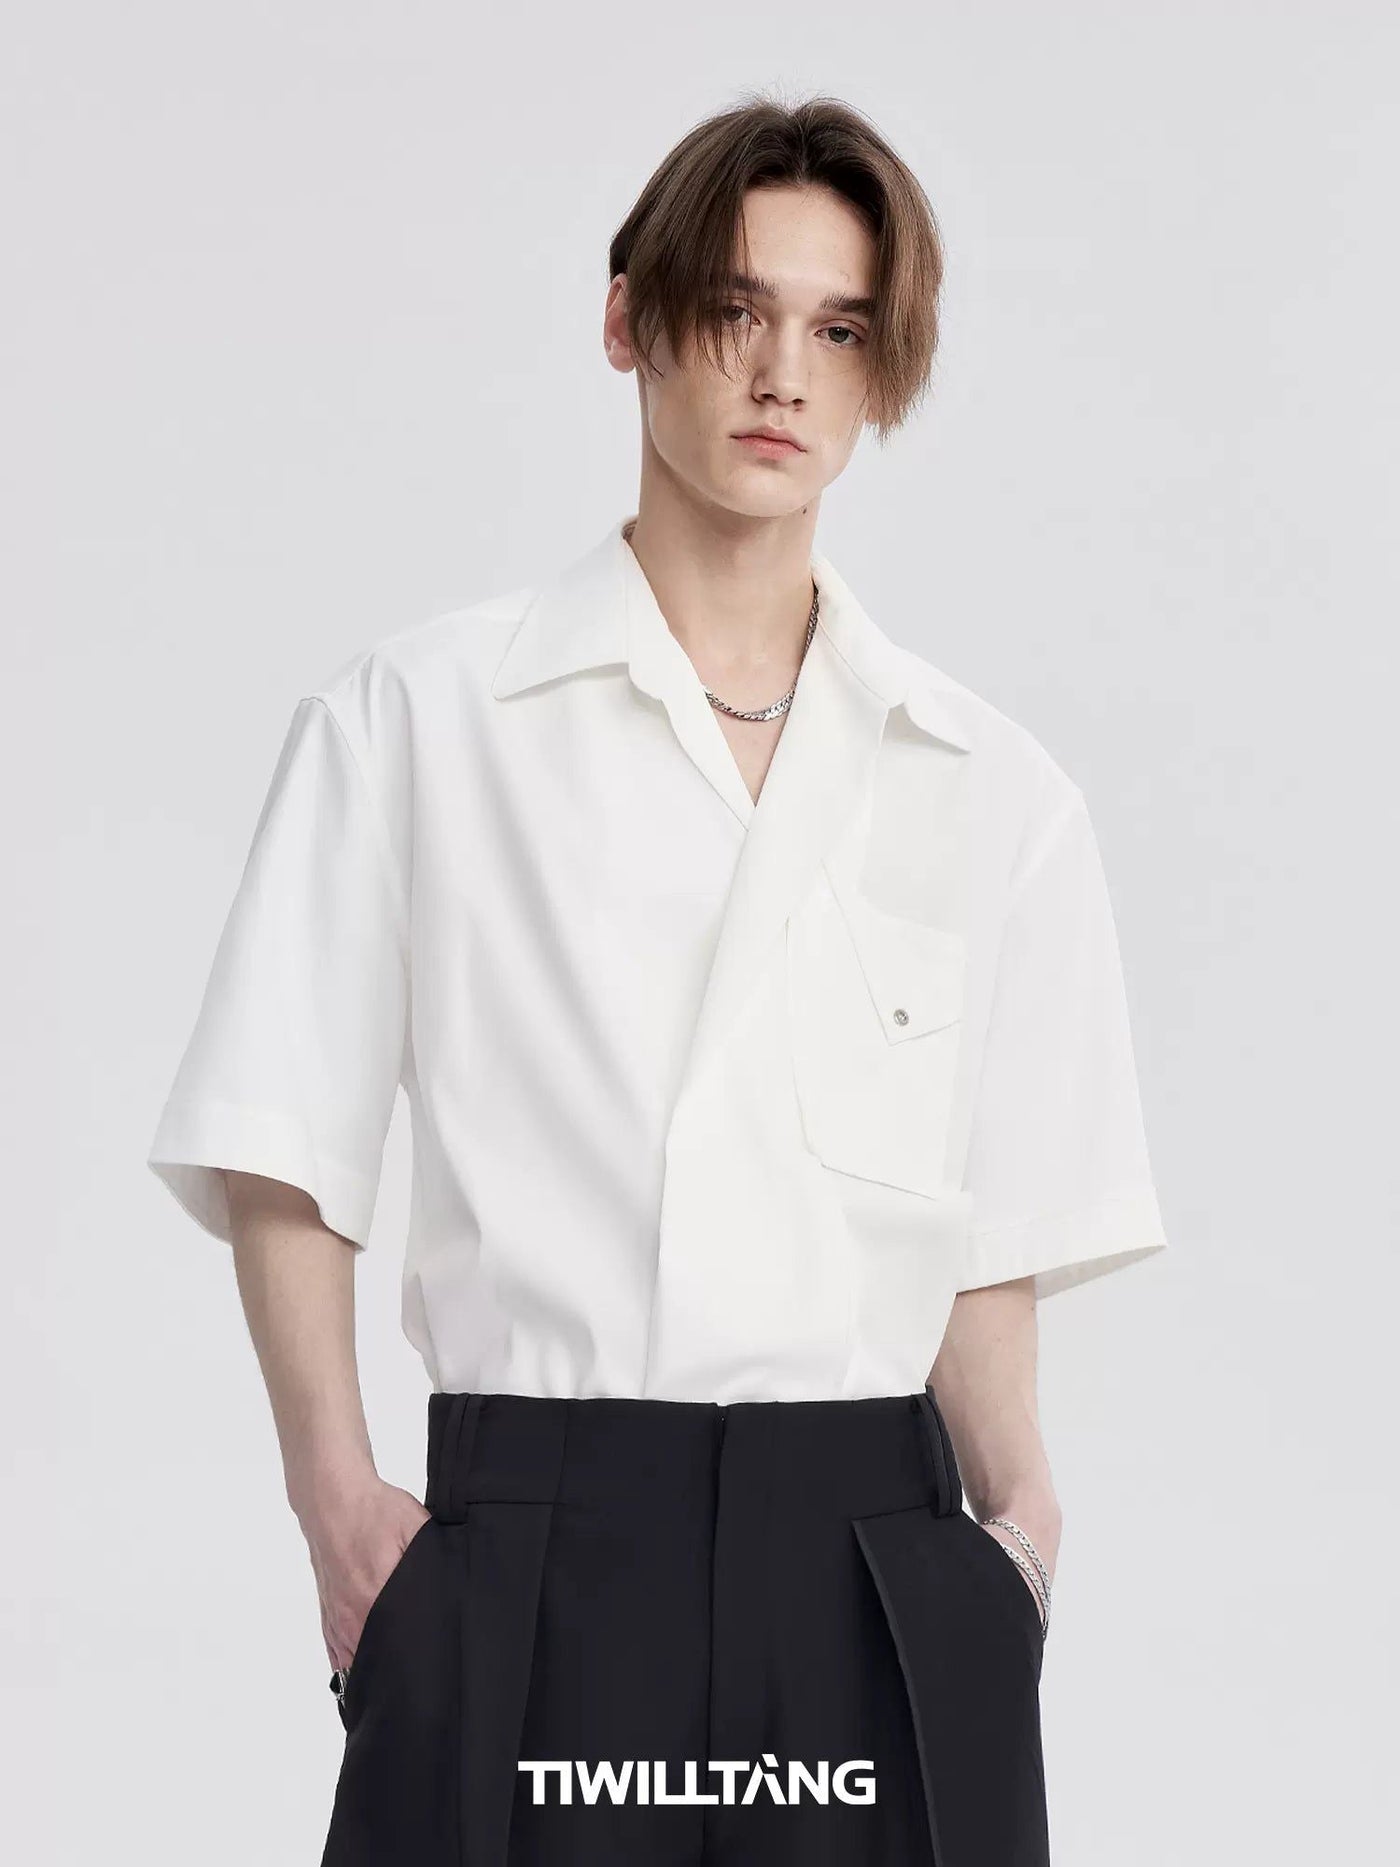 Minimal Structured Short Sleeve Shirt Korean Street Fashion Shirt By TIWILLTANG Shop Online at OH Vault